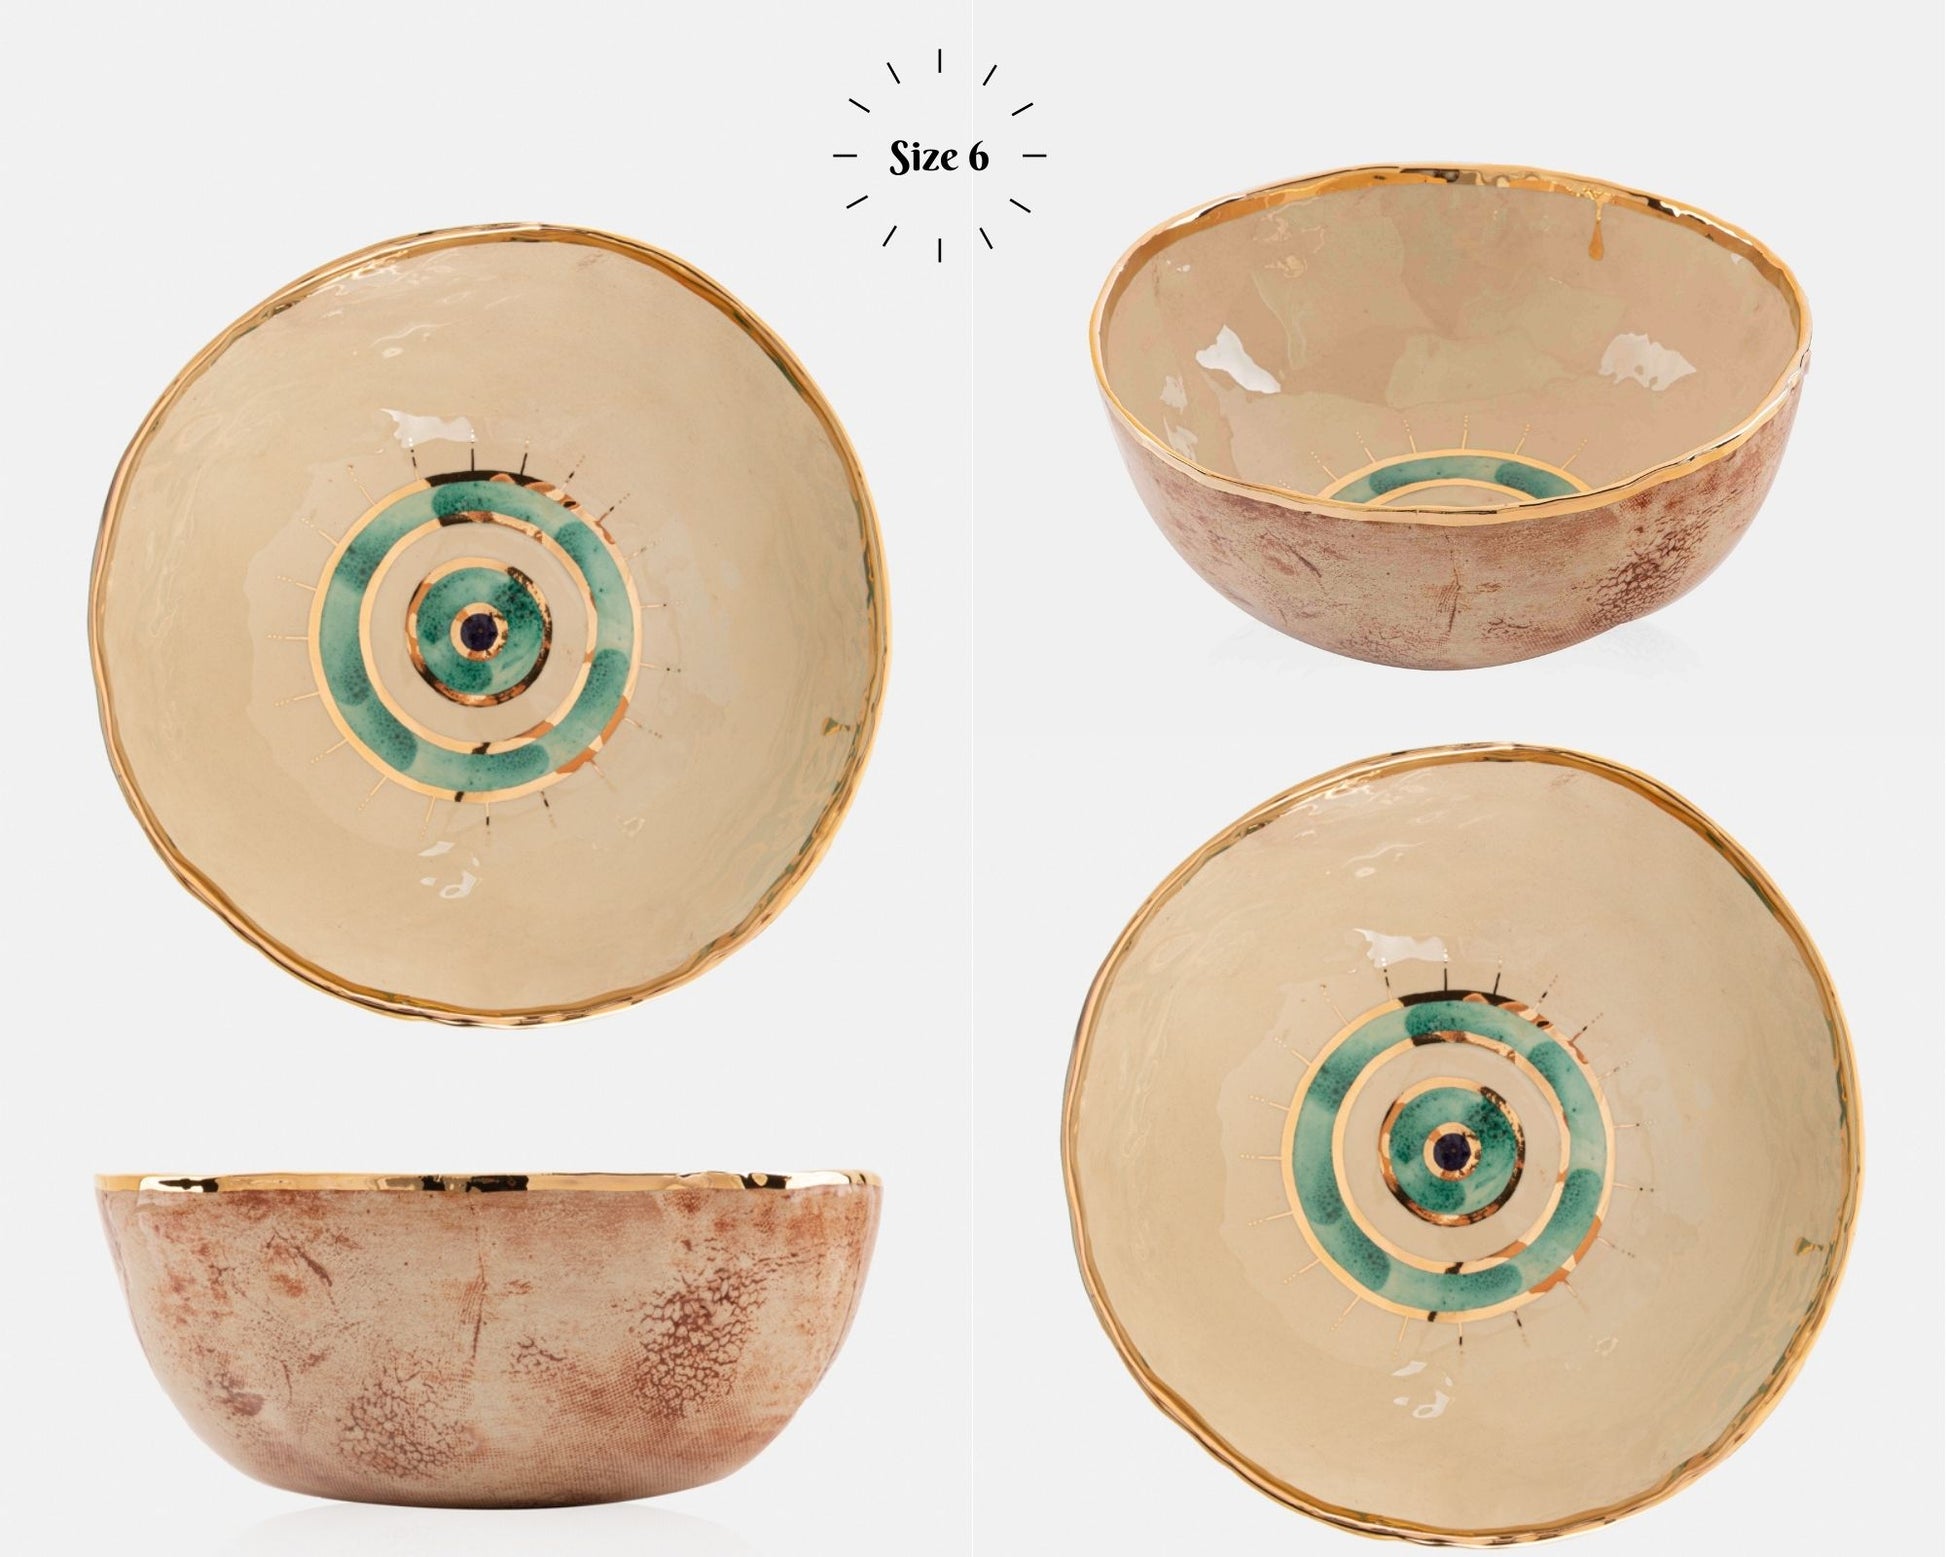 Ceramic Evil Eye Gold Plated Bowl | Miss Pop Art